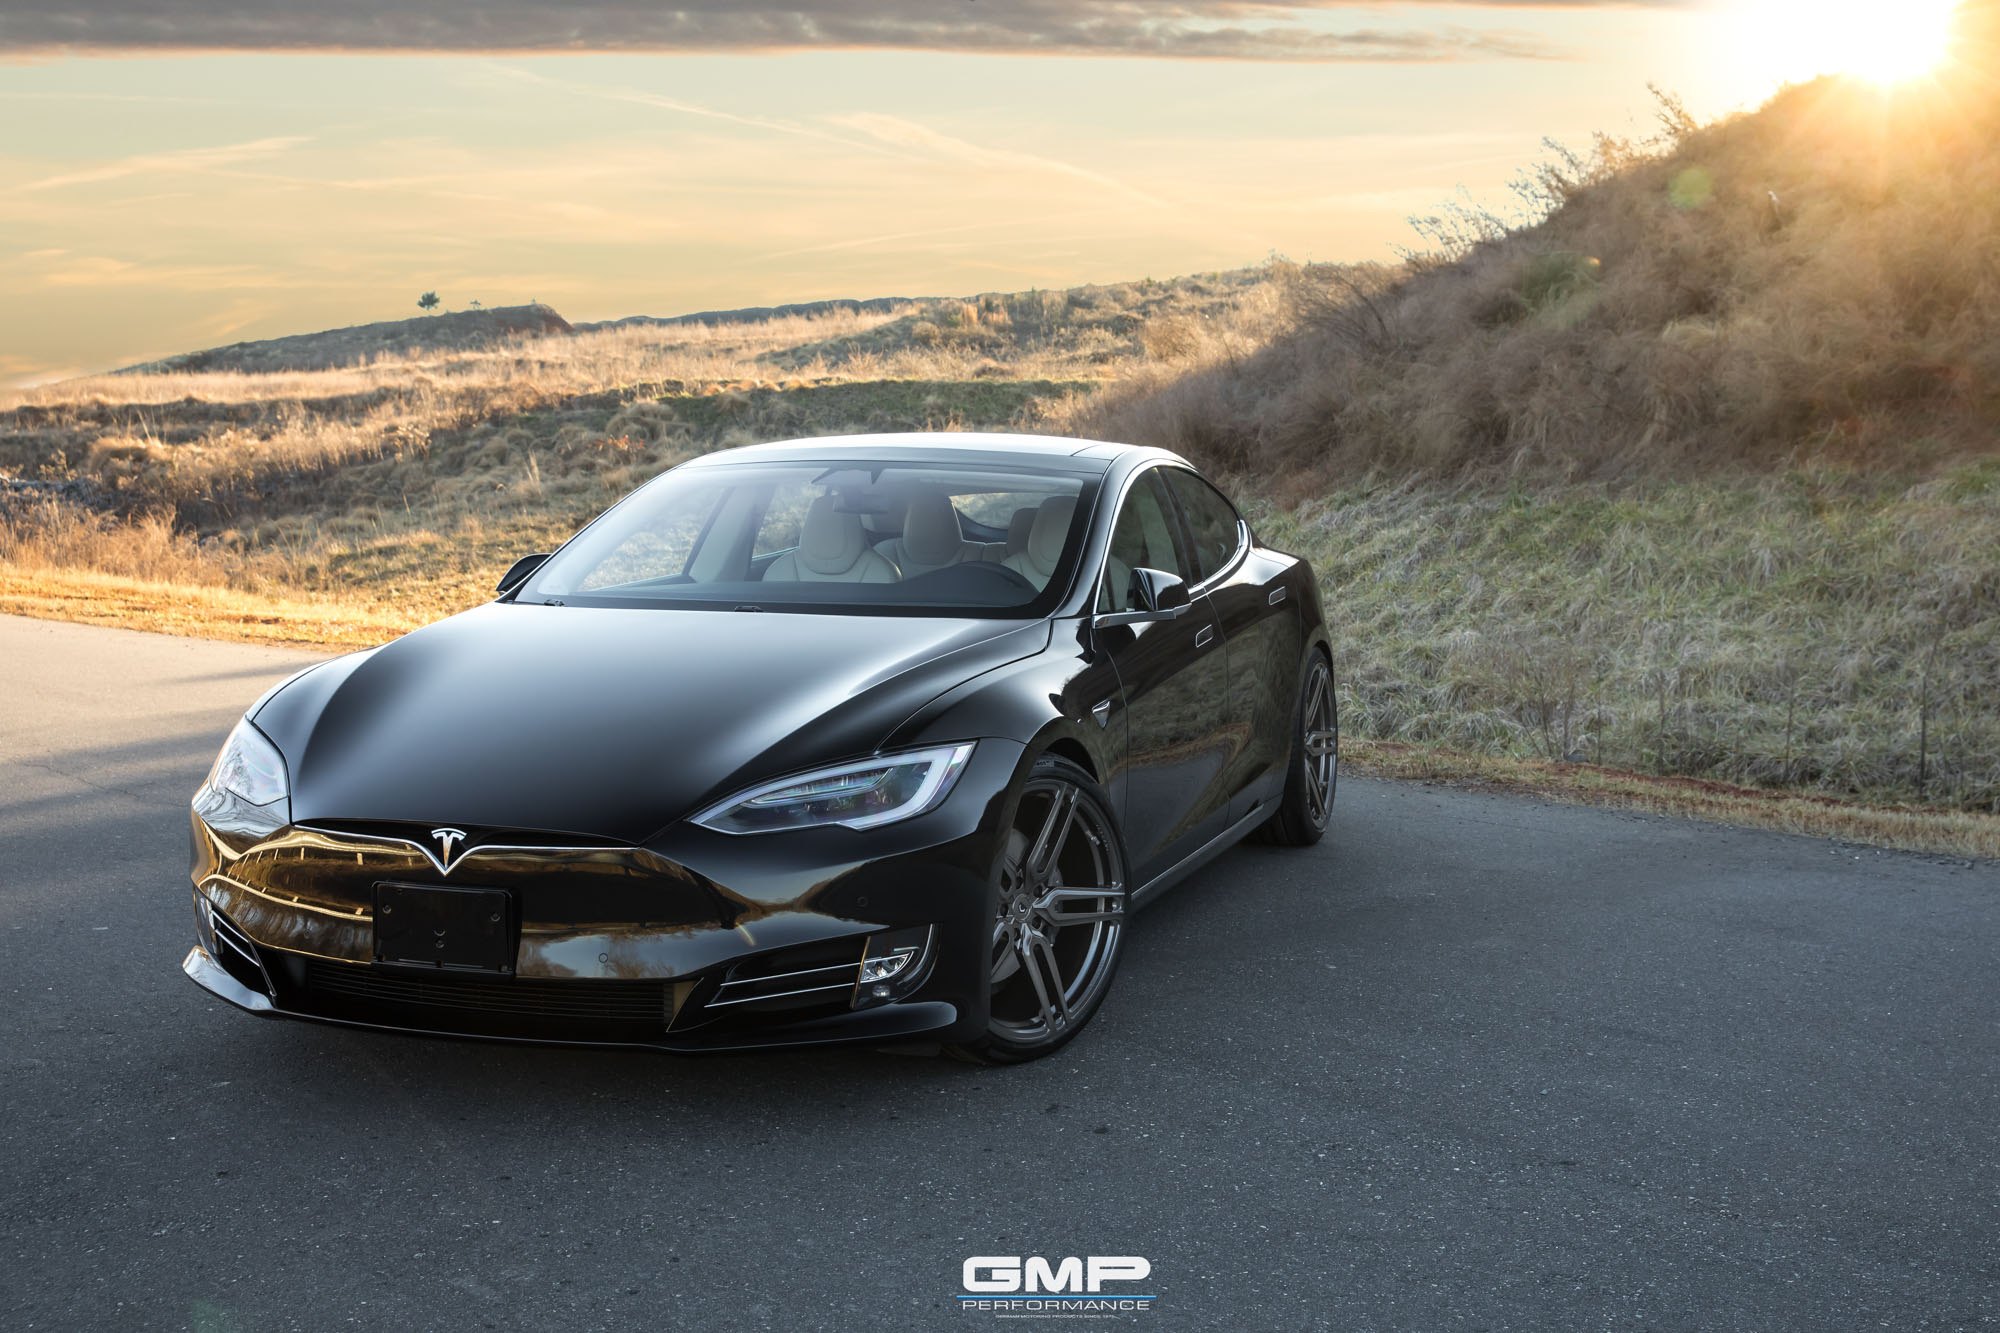 Front Bumper with LED Lights on Black Tesla Model S - Photo by Vossen